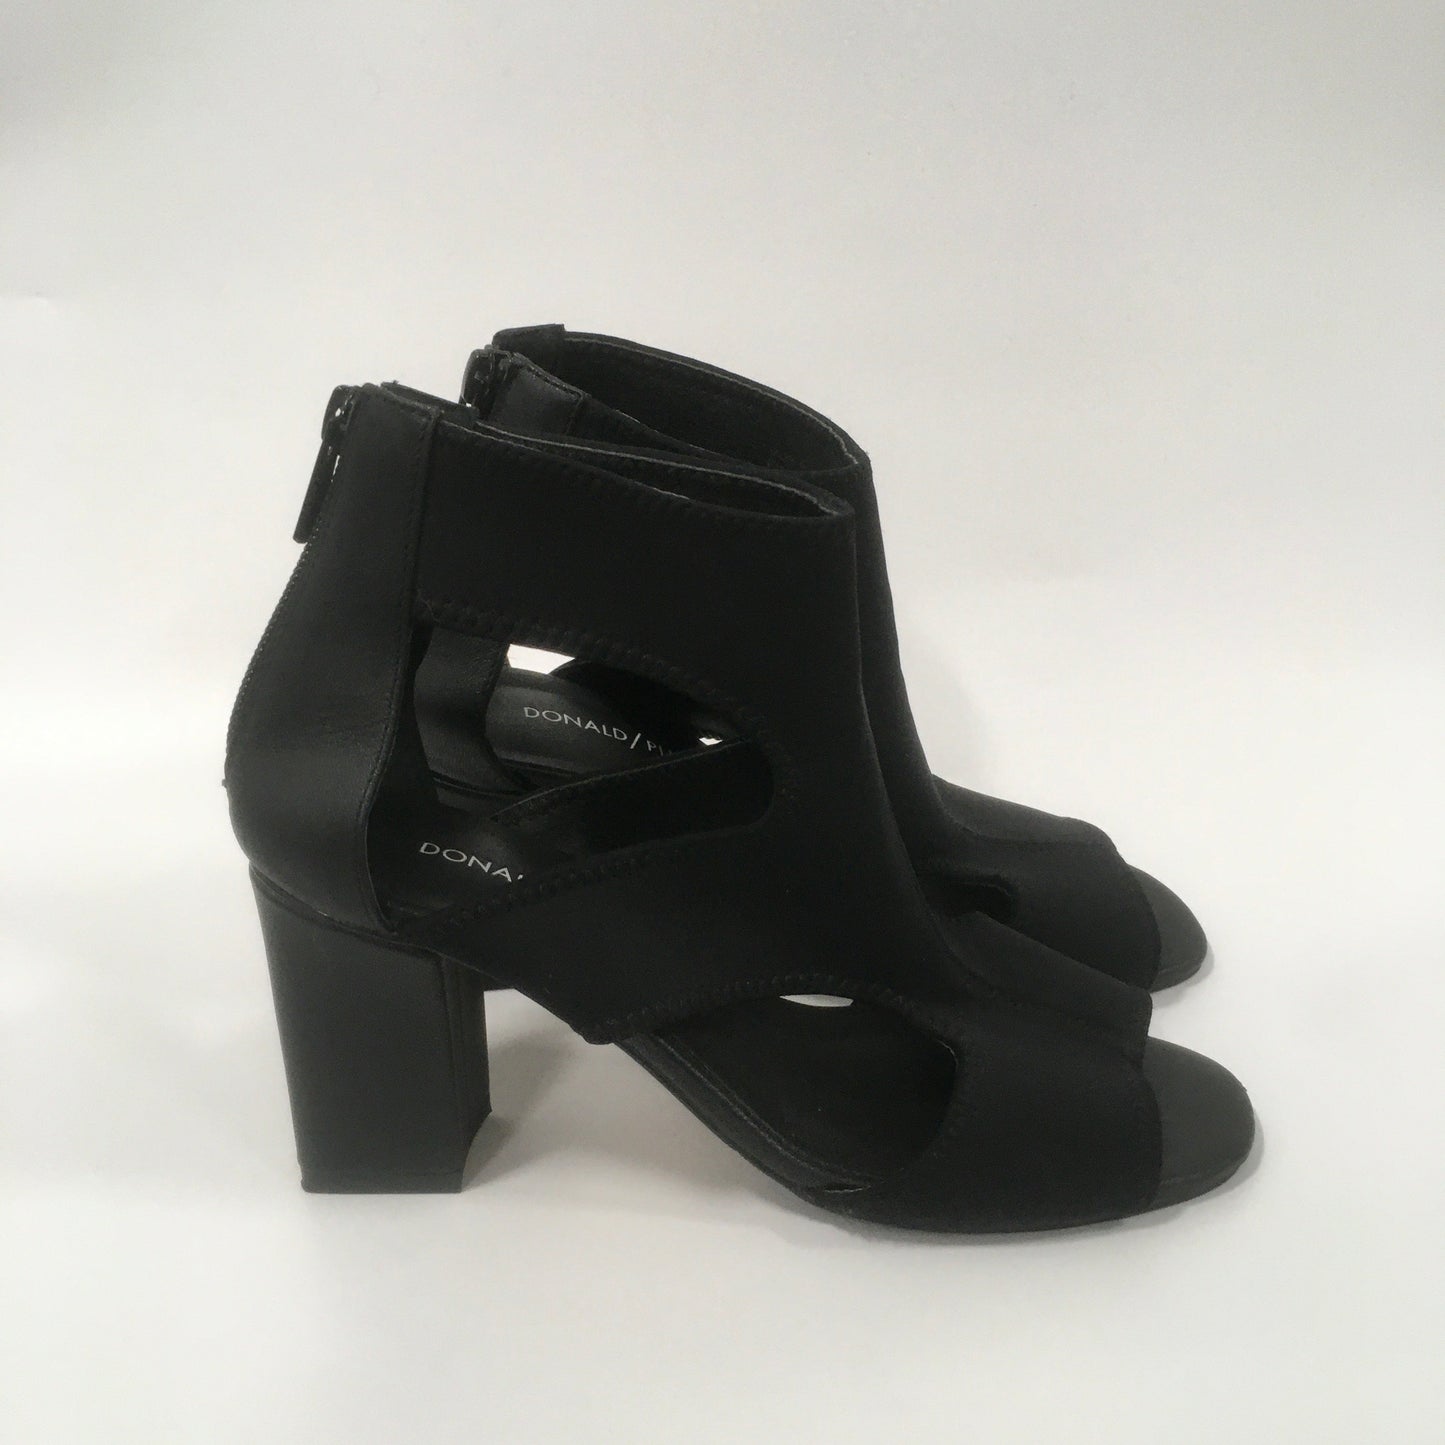 Black Shoes Heels Block Donald Pliner, Size 6